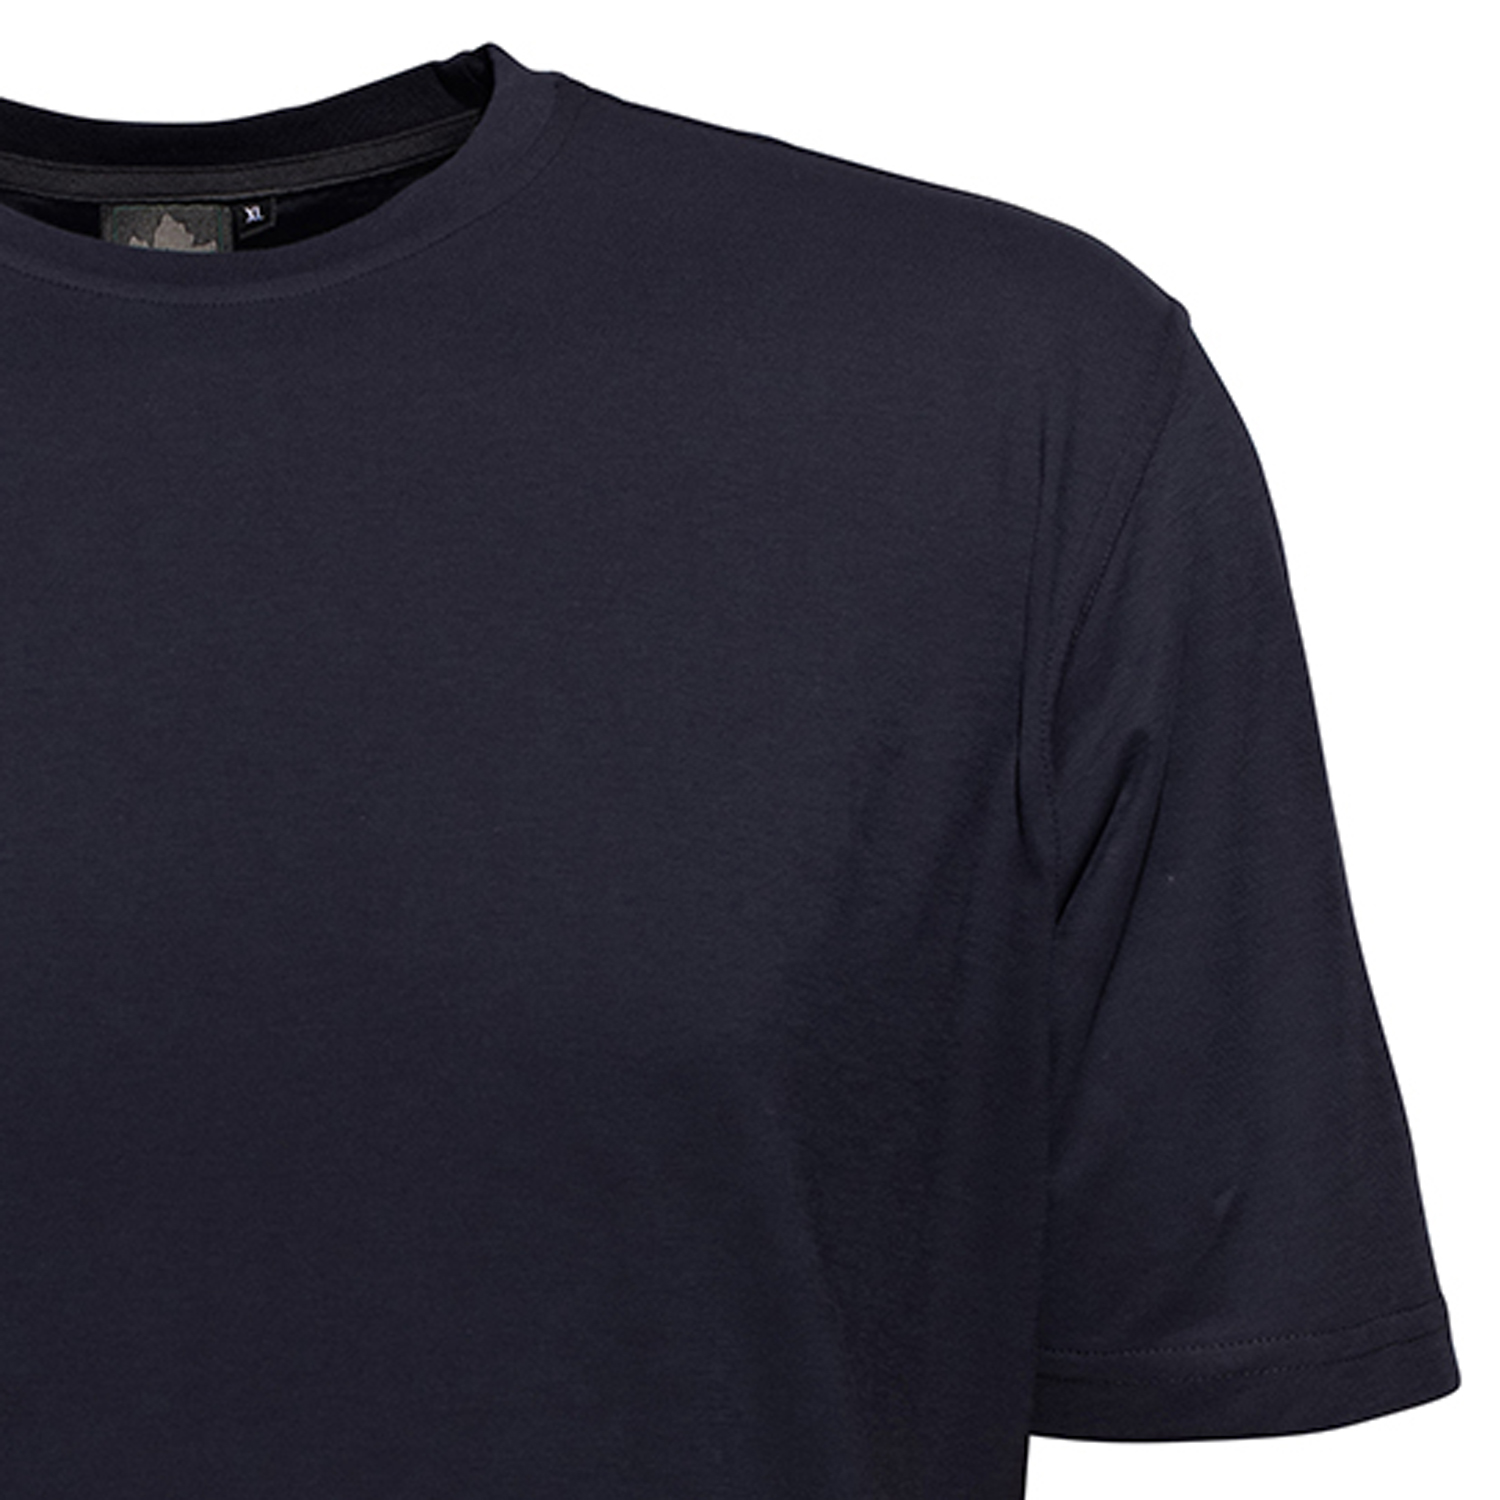 T-shirt en bleu foncé by Ahorn Sportswear en grandes tailles 2XL - 10XL